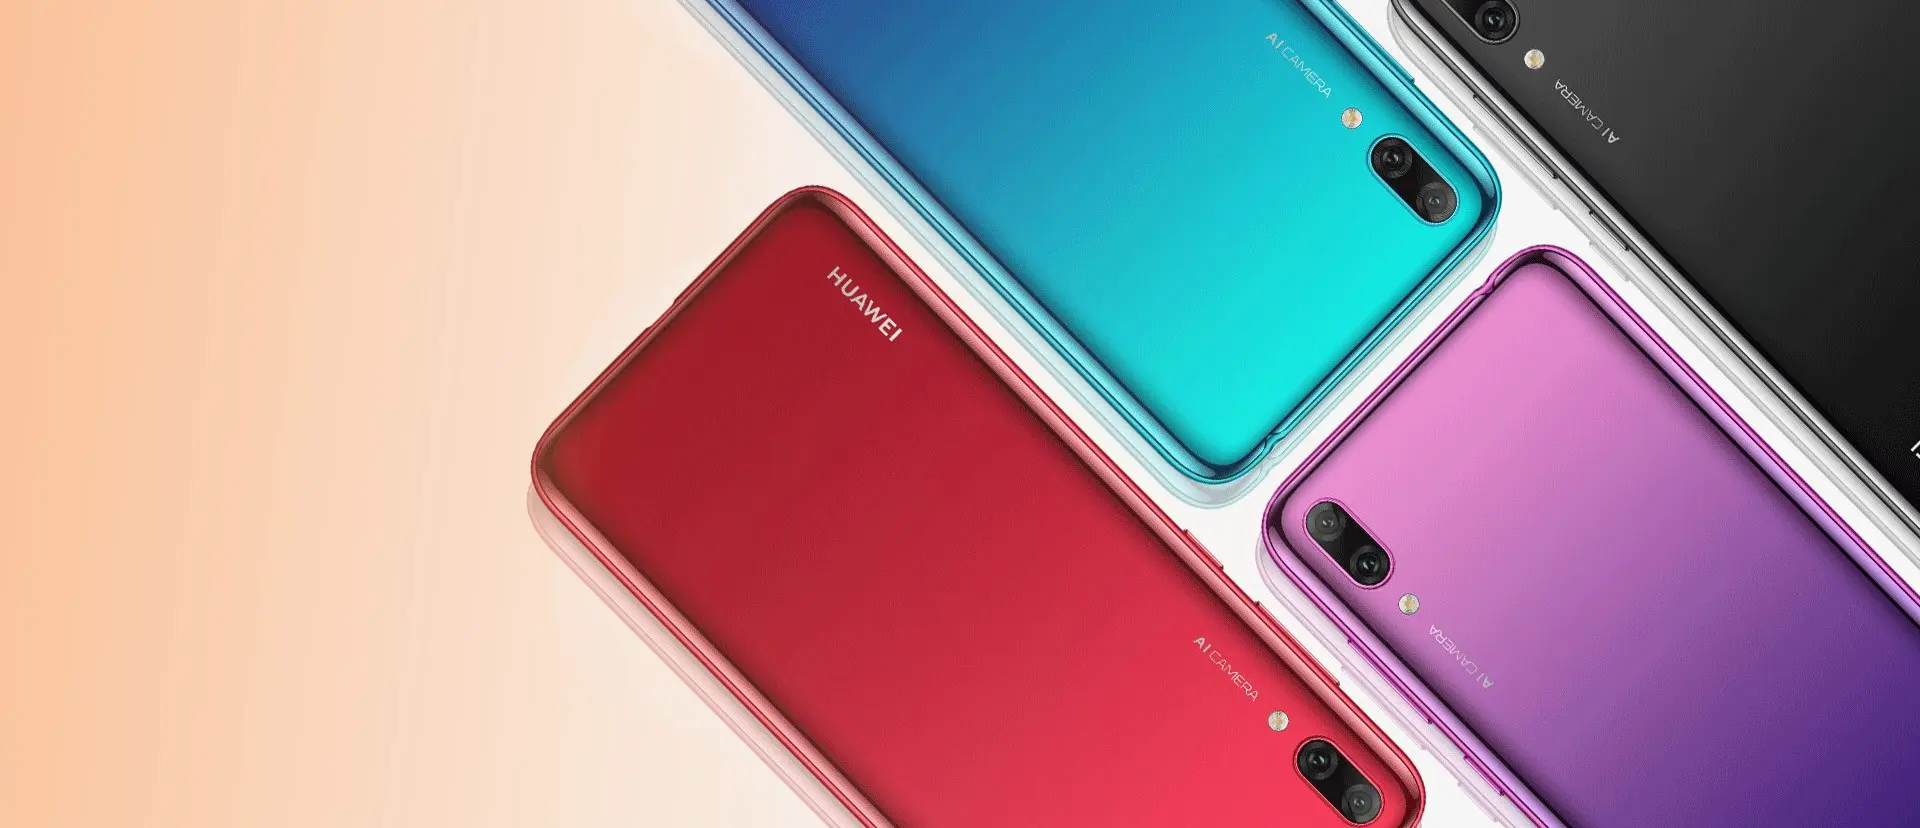 TENAA aprueba al Huawei Enjoy9 (Y7 Prime 2019)